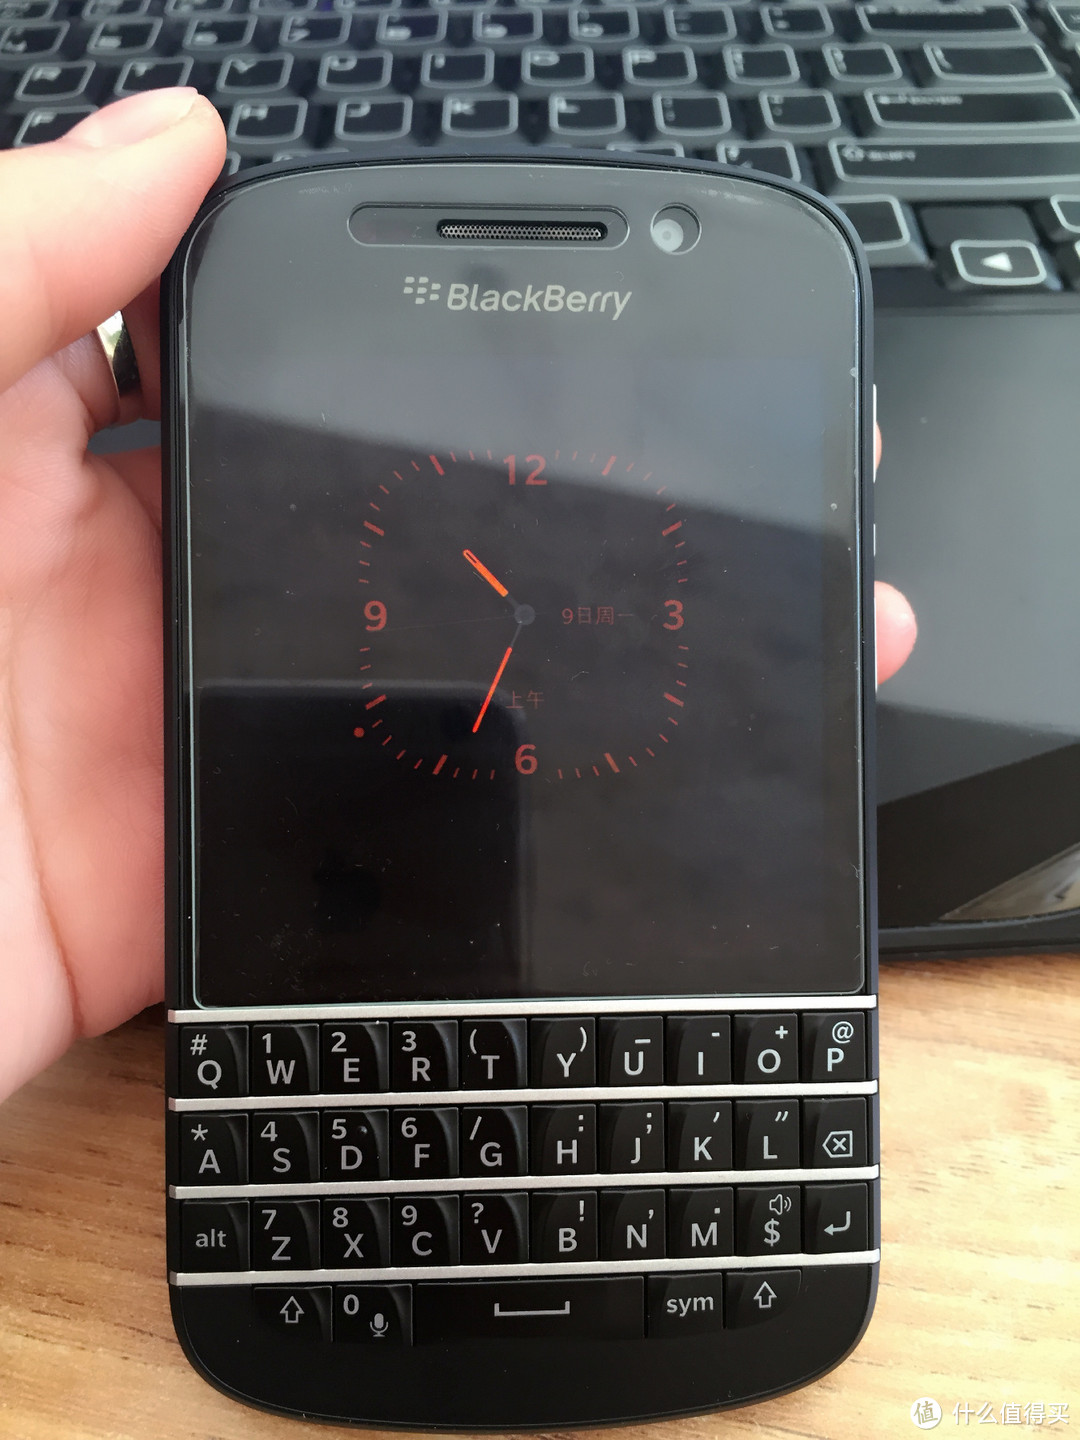 LUMIA1020、黑莓Q10、泛泰A870 — 2014年尝试过的备用机简单总结分享，供大家参考